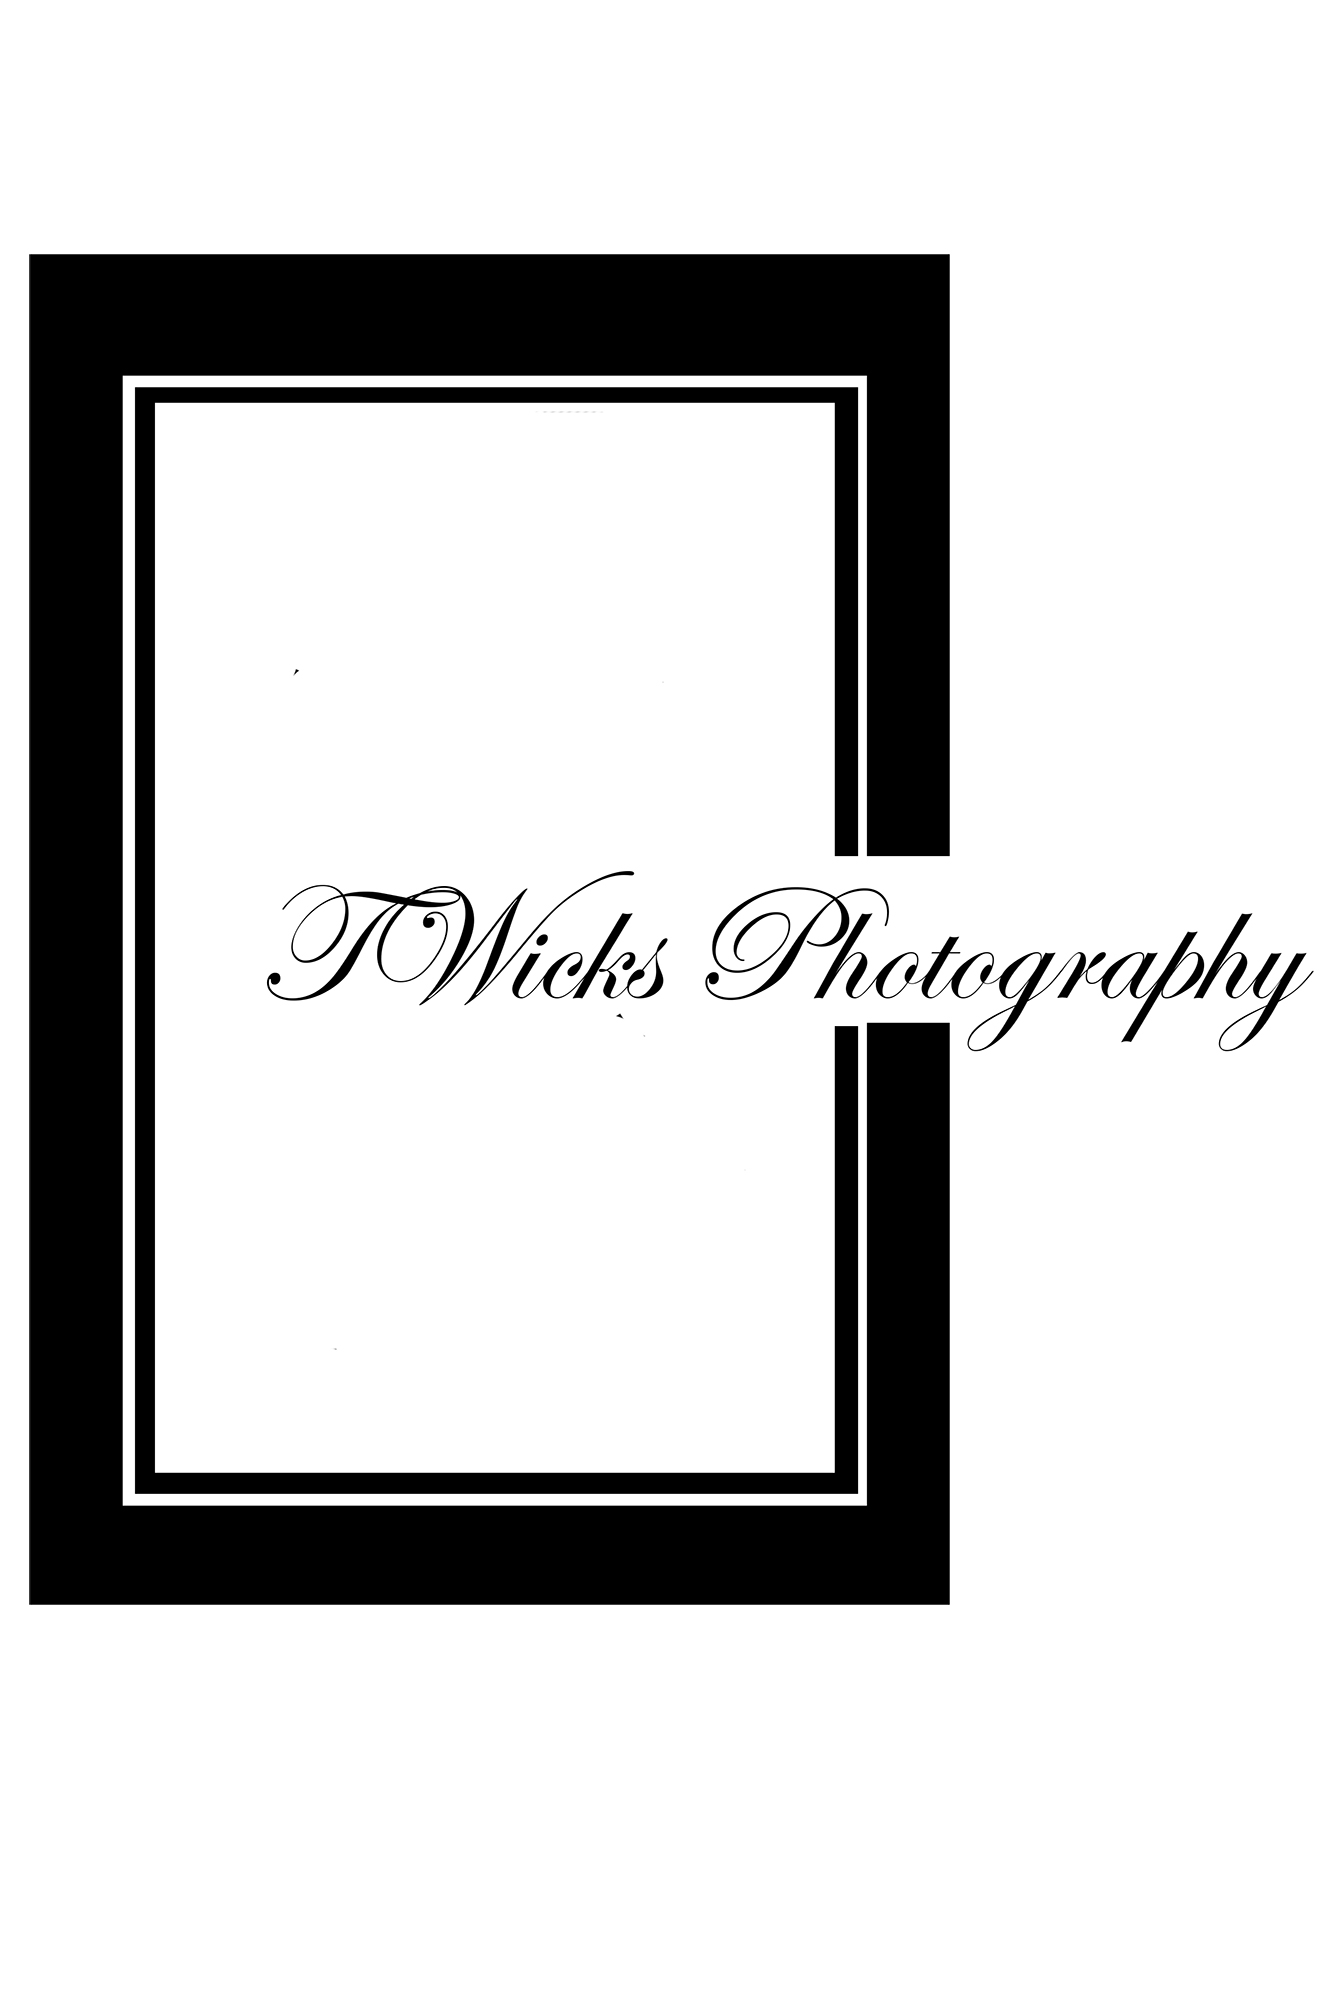 TWicks Photography